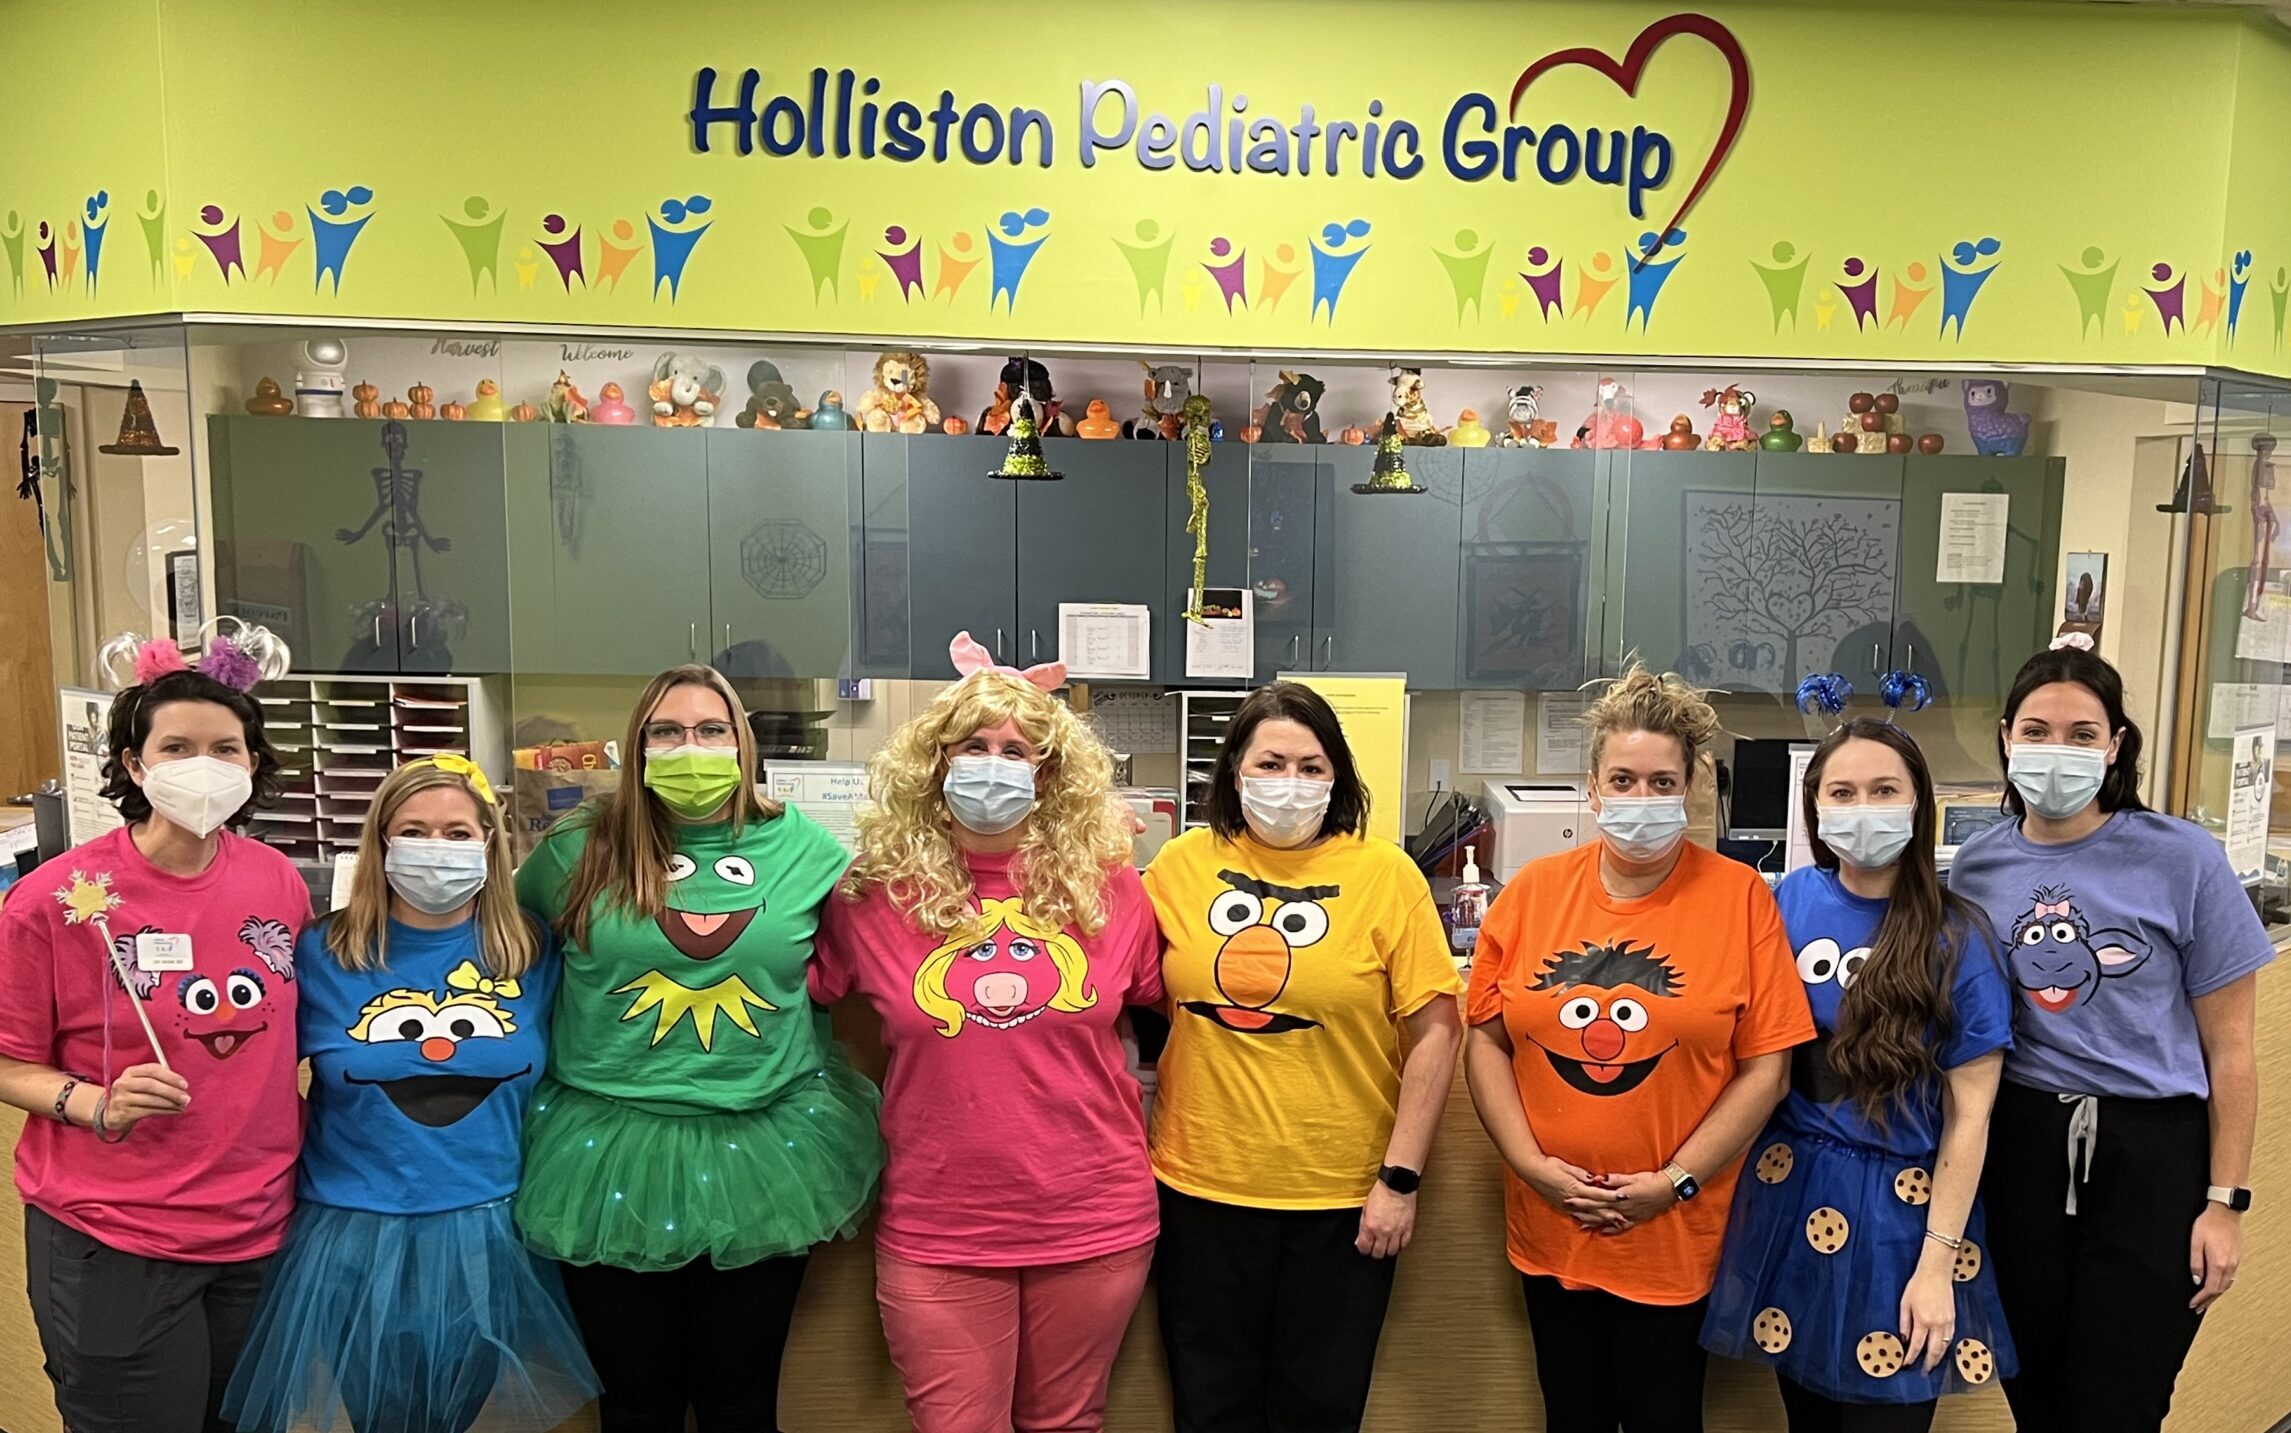 Holliston Pediatric Group - About Us